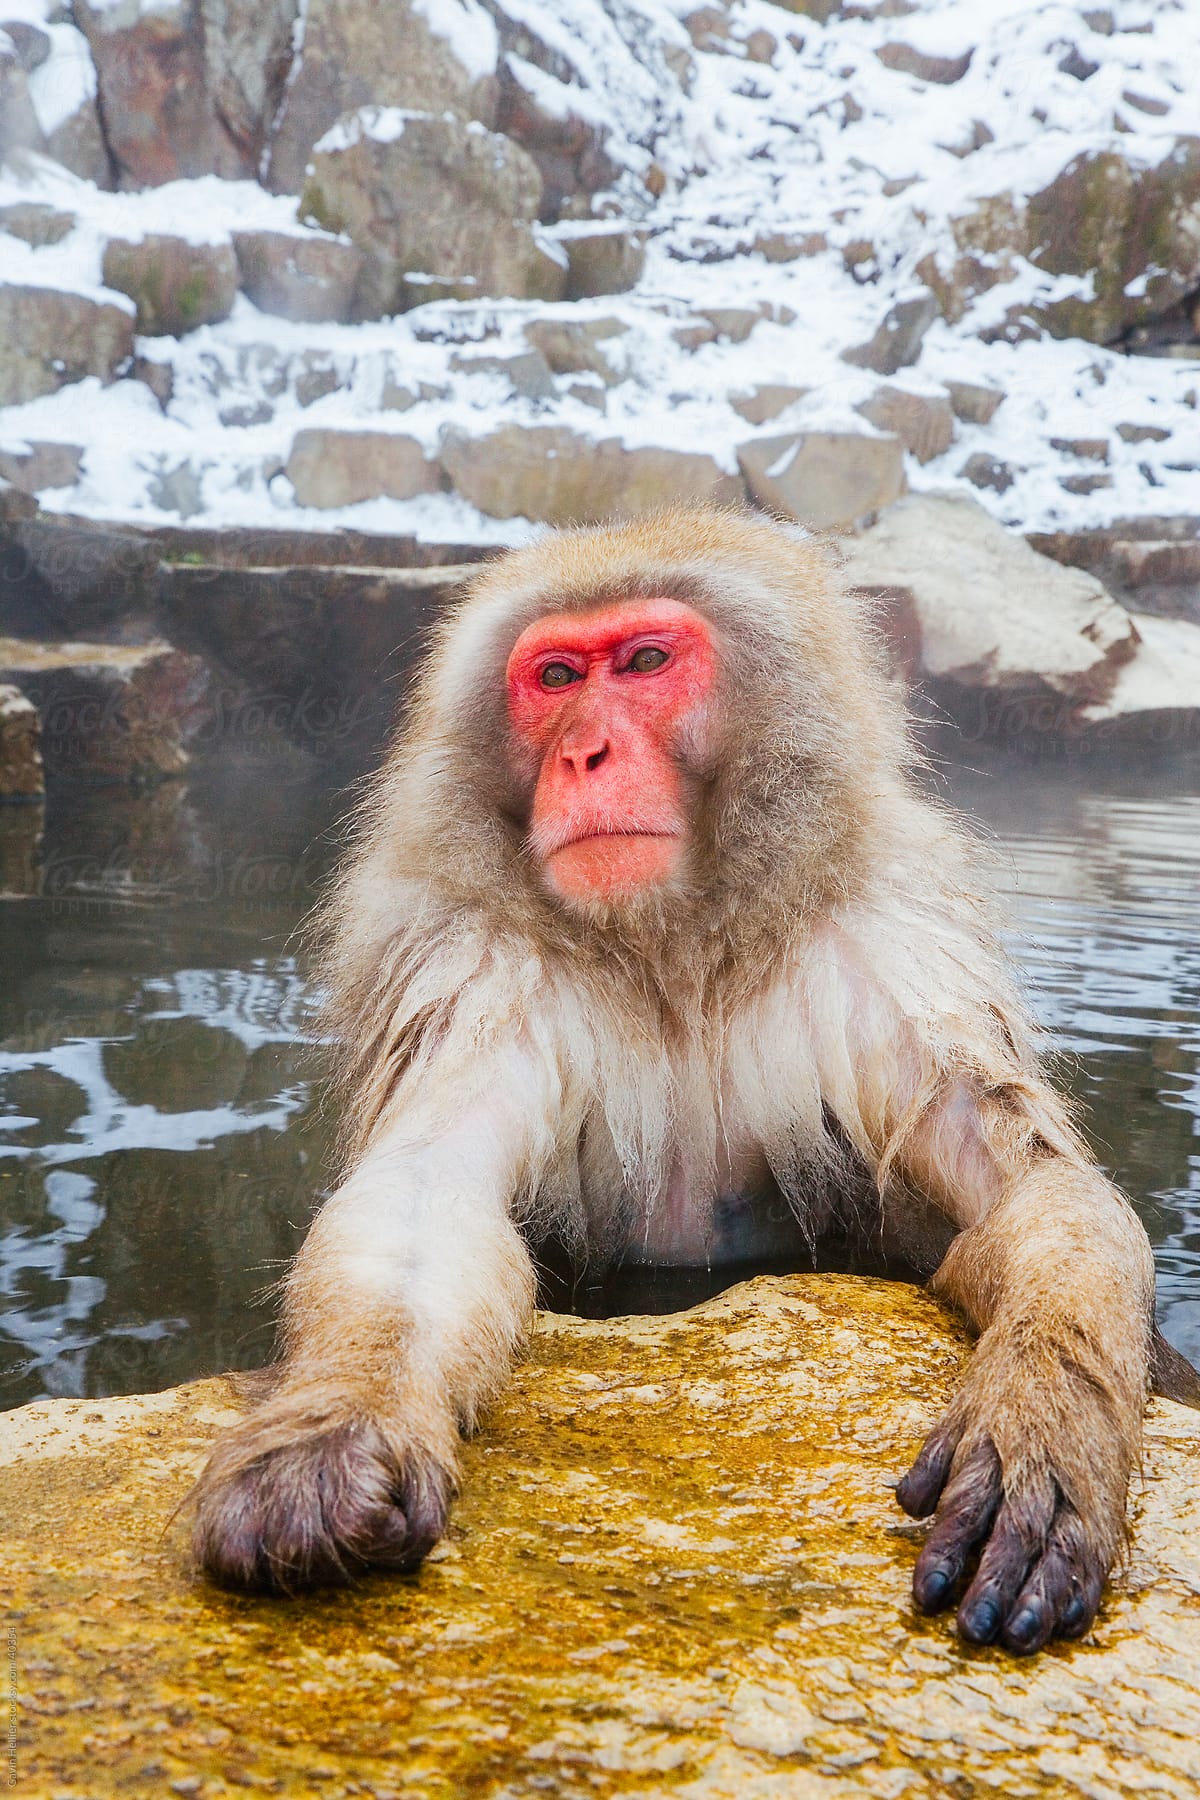 Young Japanese macaque (Macaca fuscata) / Snow monkey soaking in hot thermal spring pool, Joshin-etsu National Park, Honshu, Japan